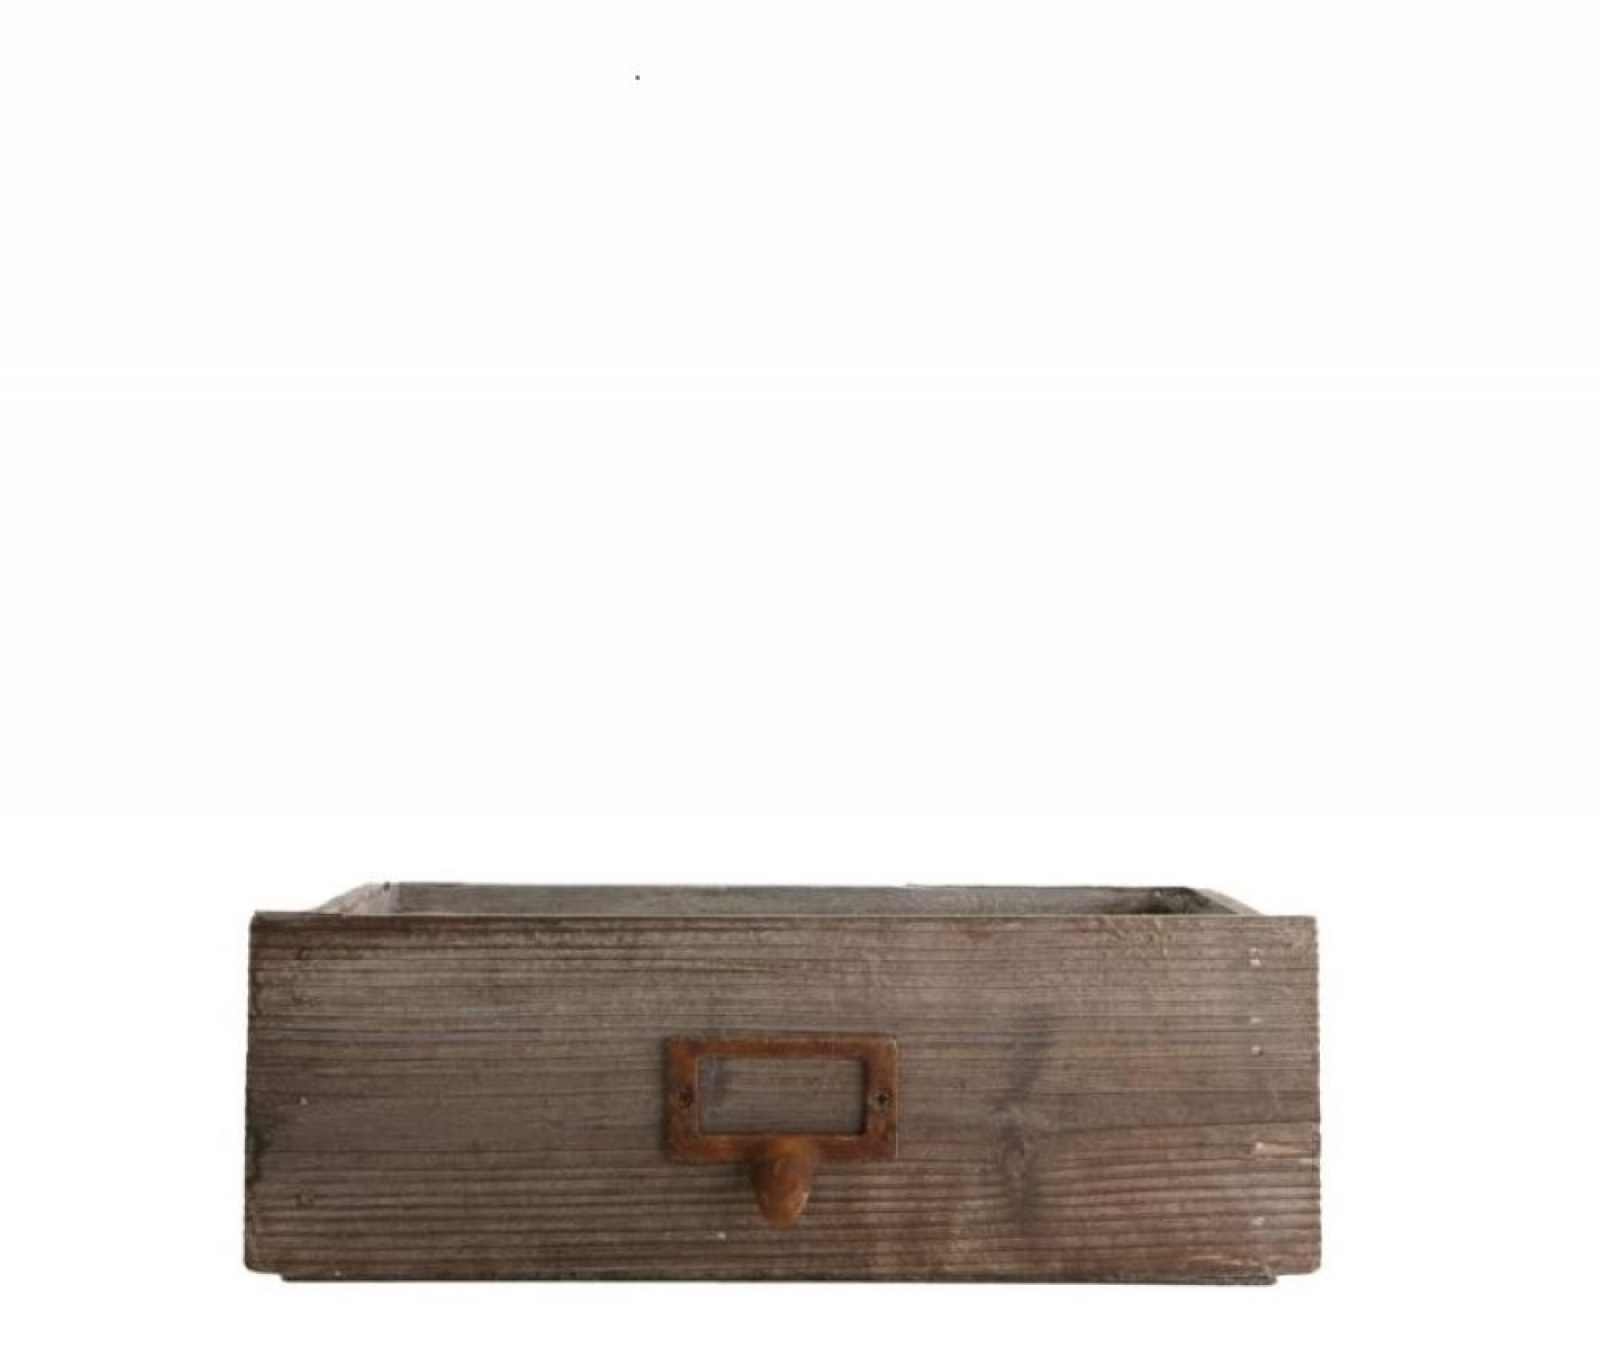 Holz-Schublade antik braun 27/25x12.5x9cm w/pl 28781-607